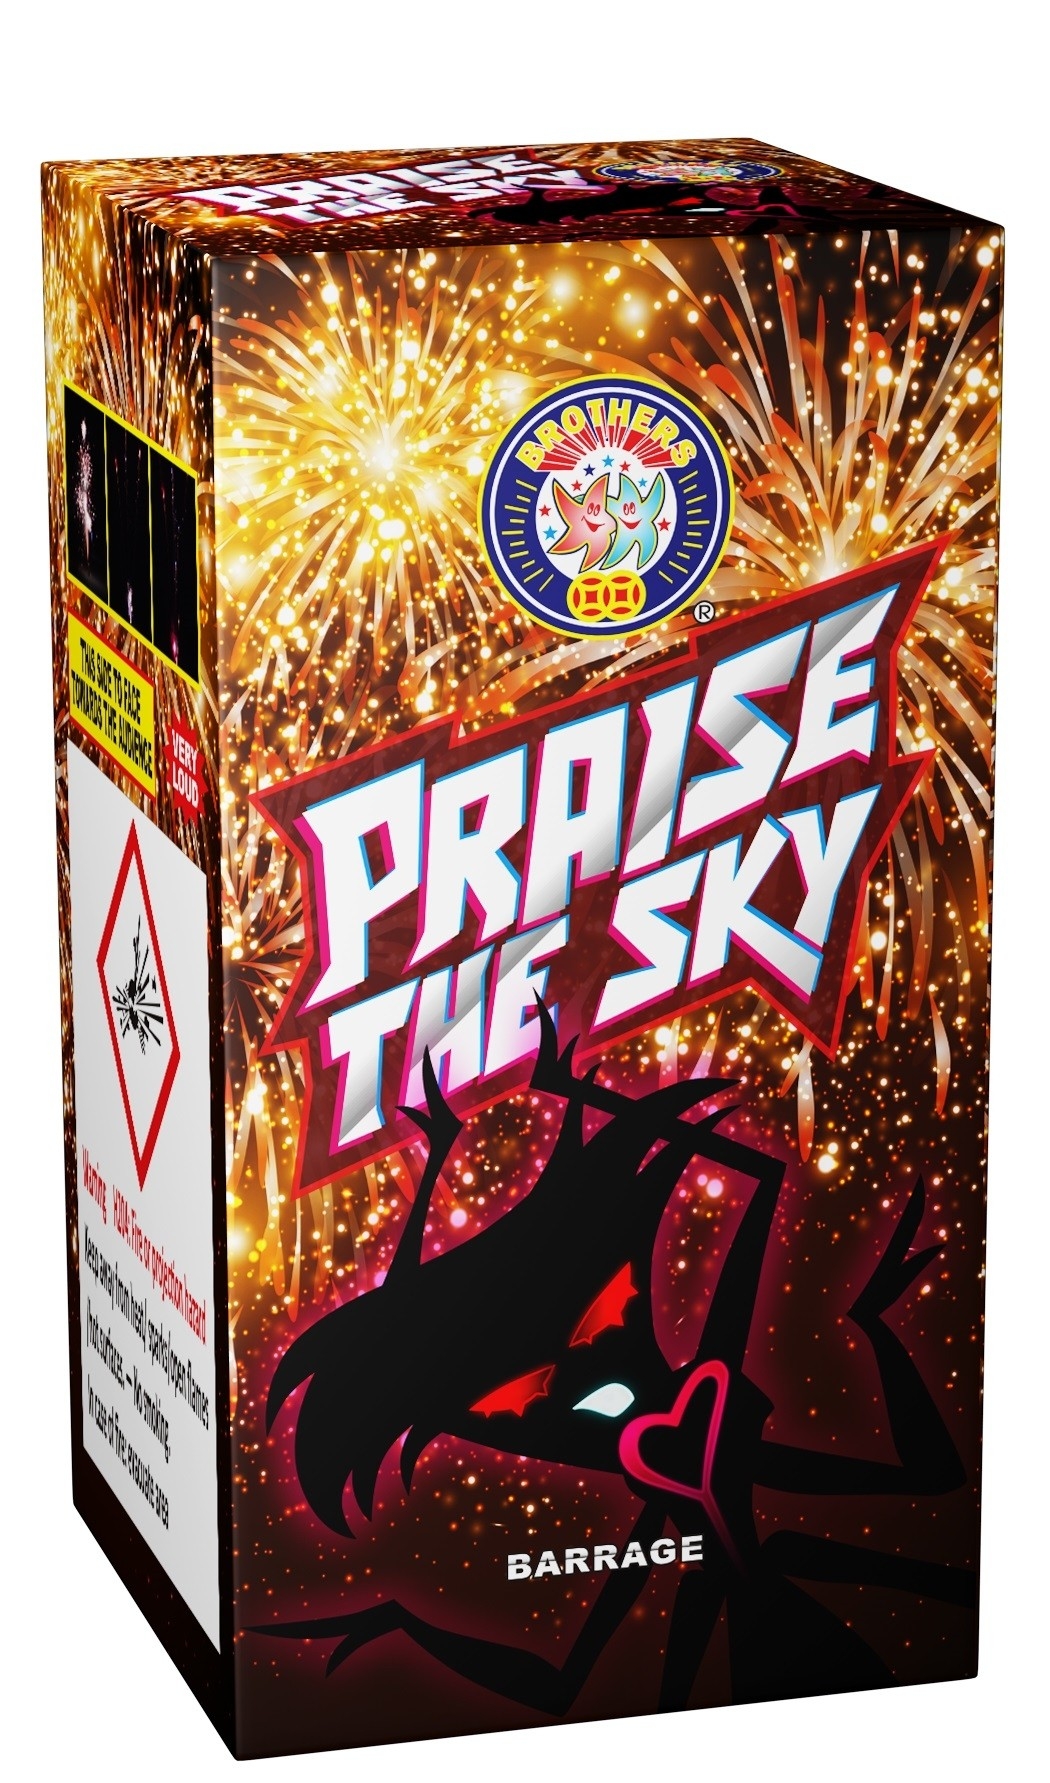 Praise the Sky Fountain Available at Fireworks Kingdom